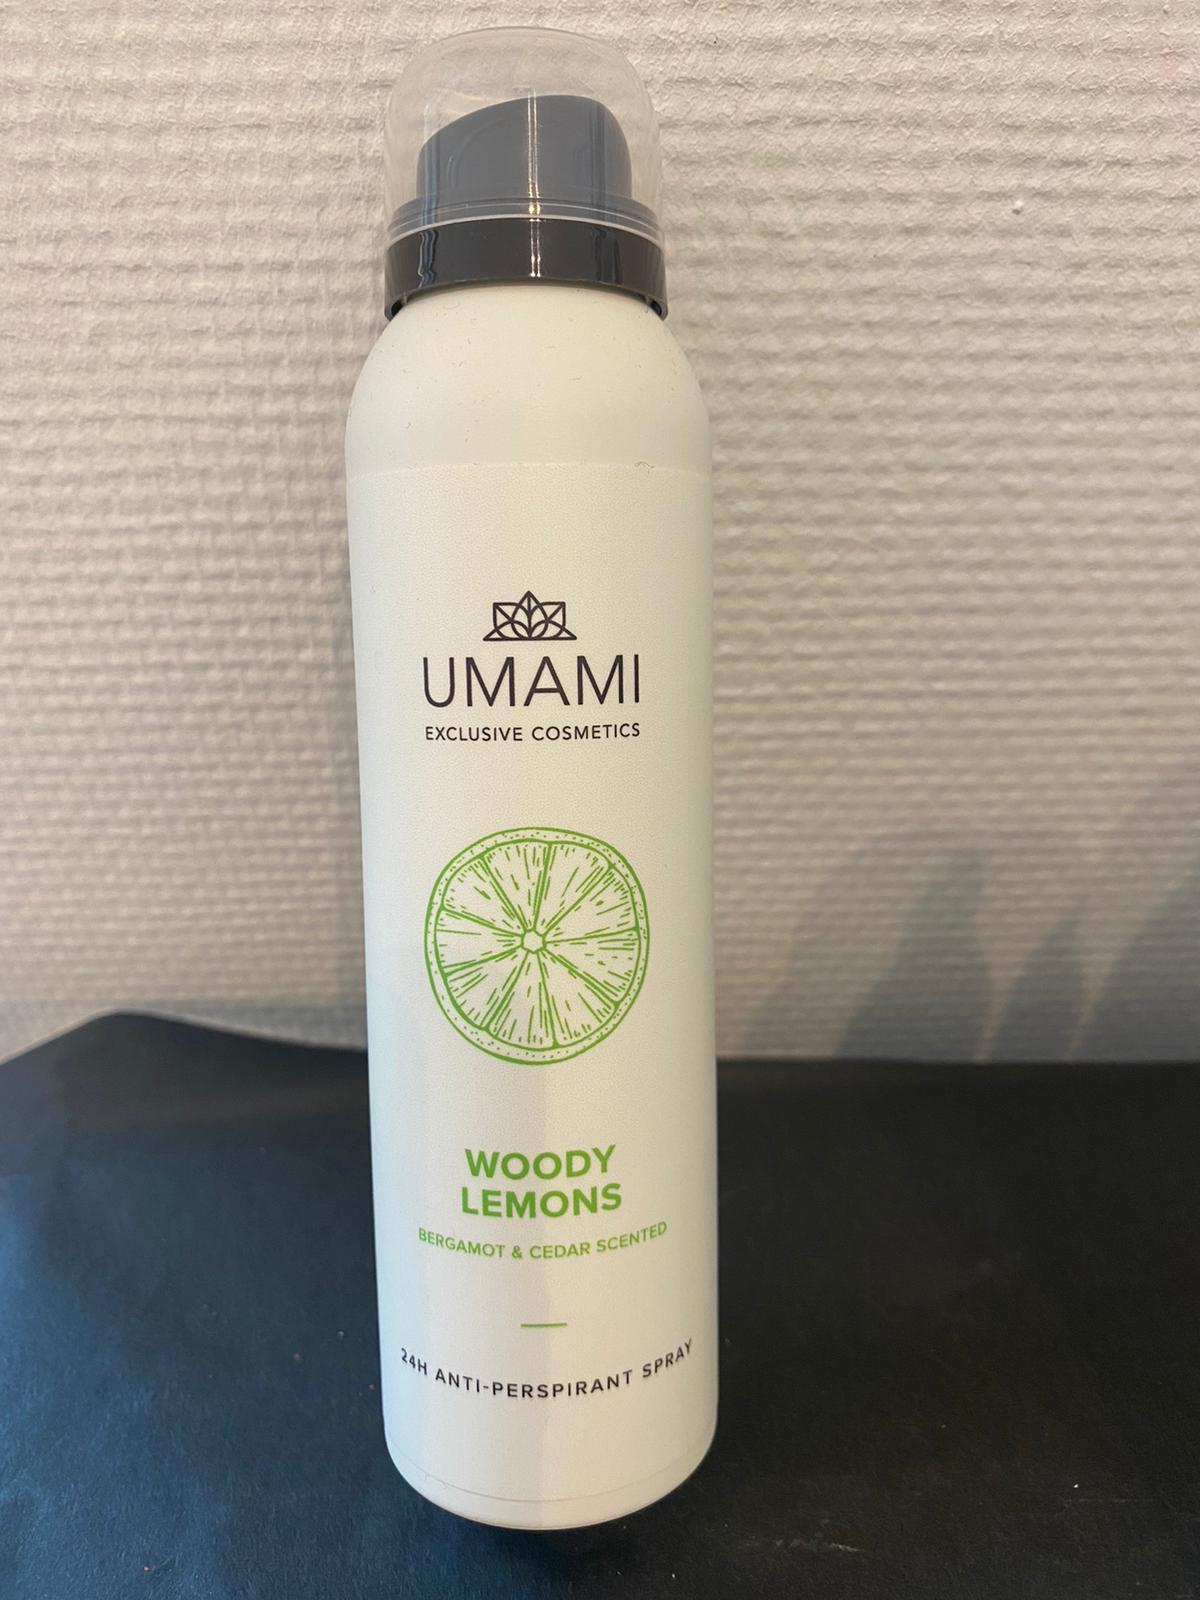 Umami woody lemons anti perspirant spray